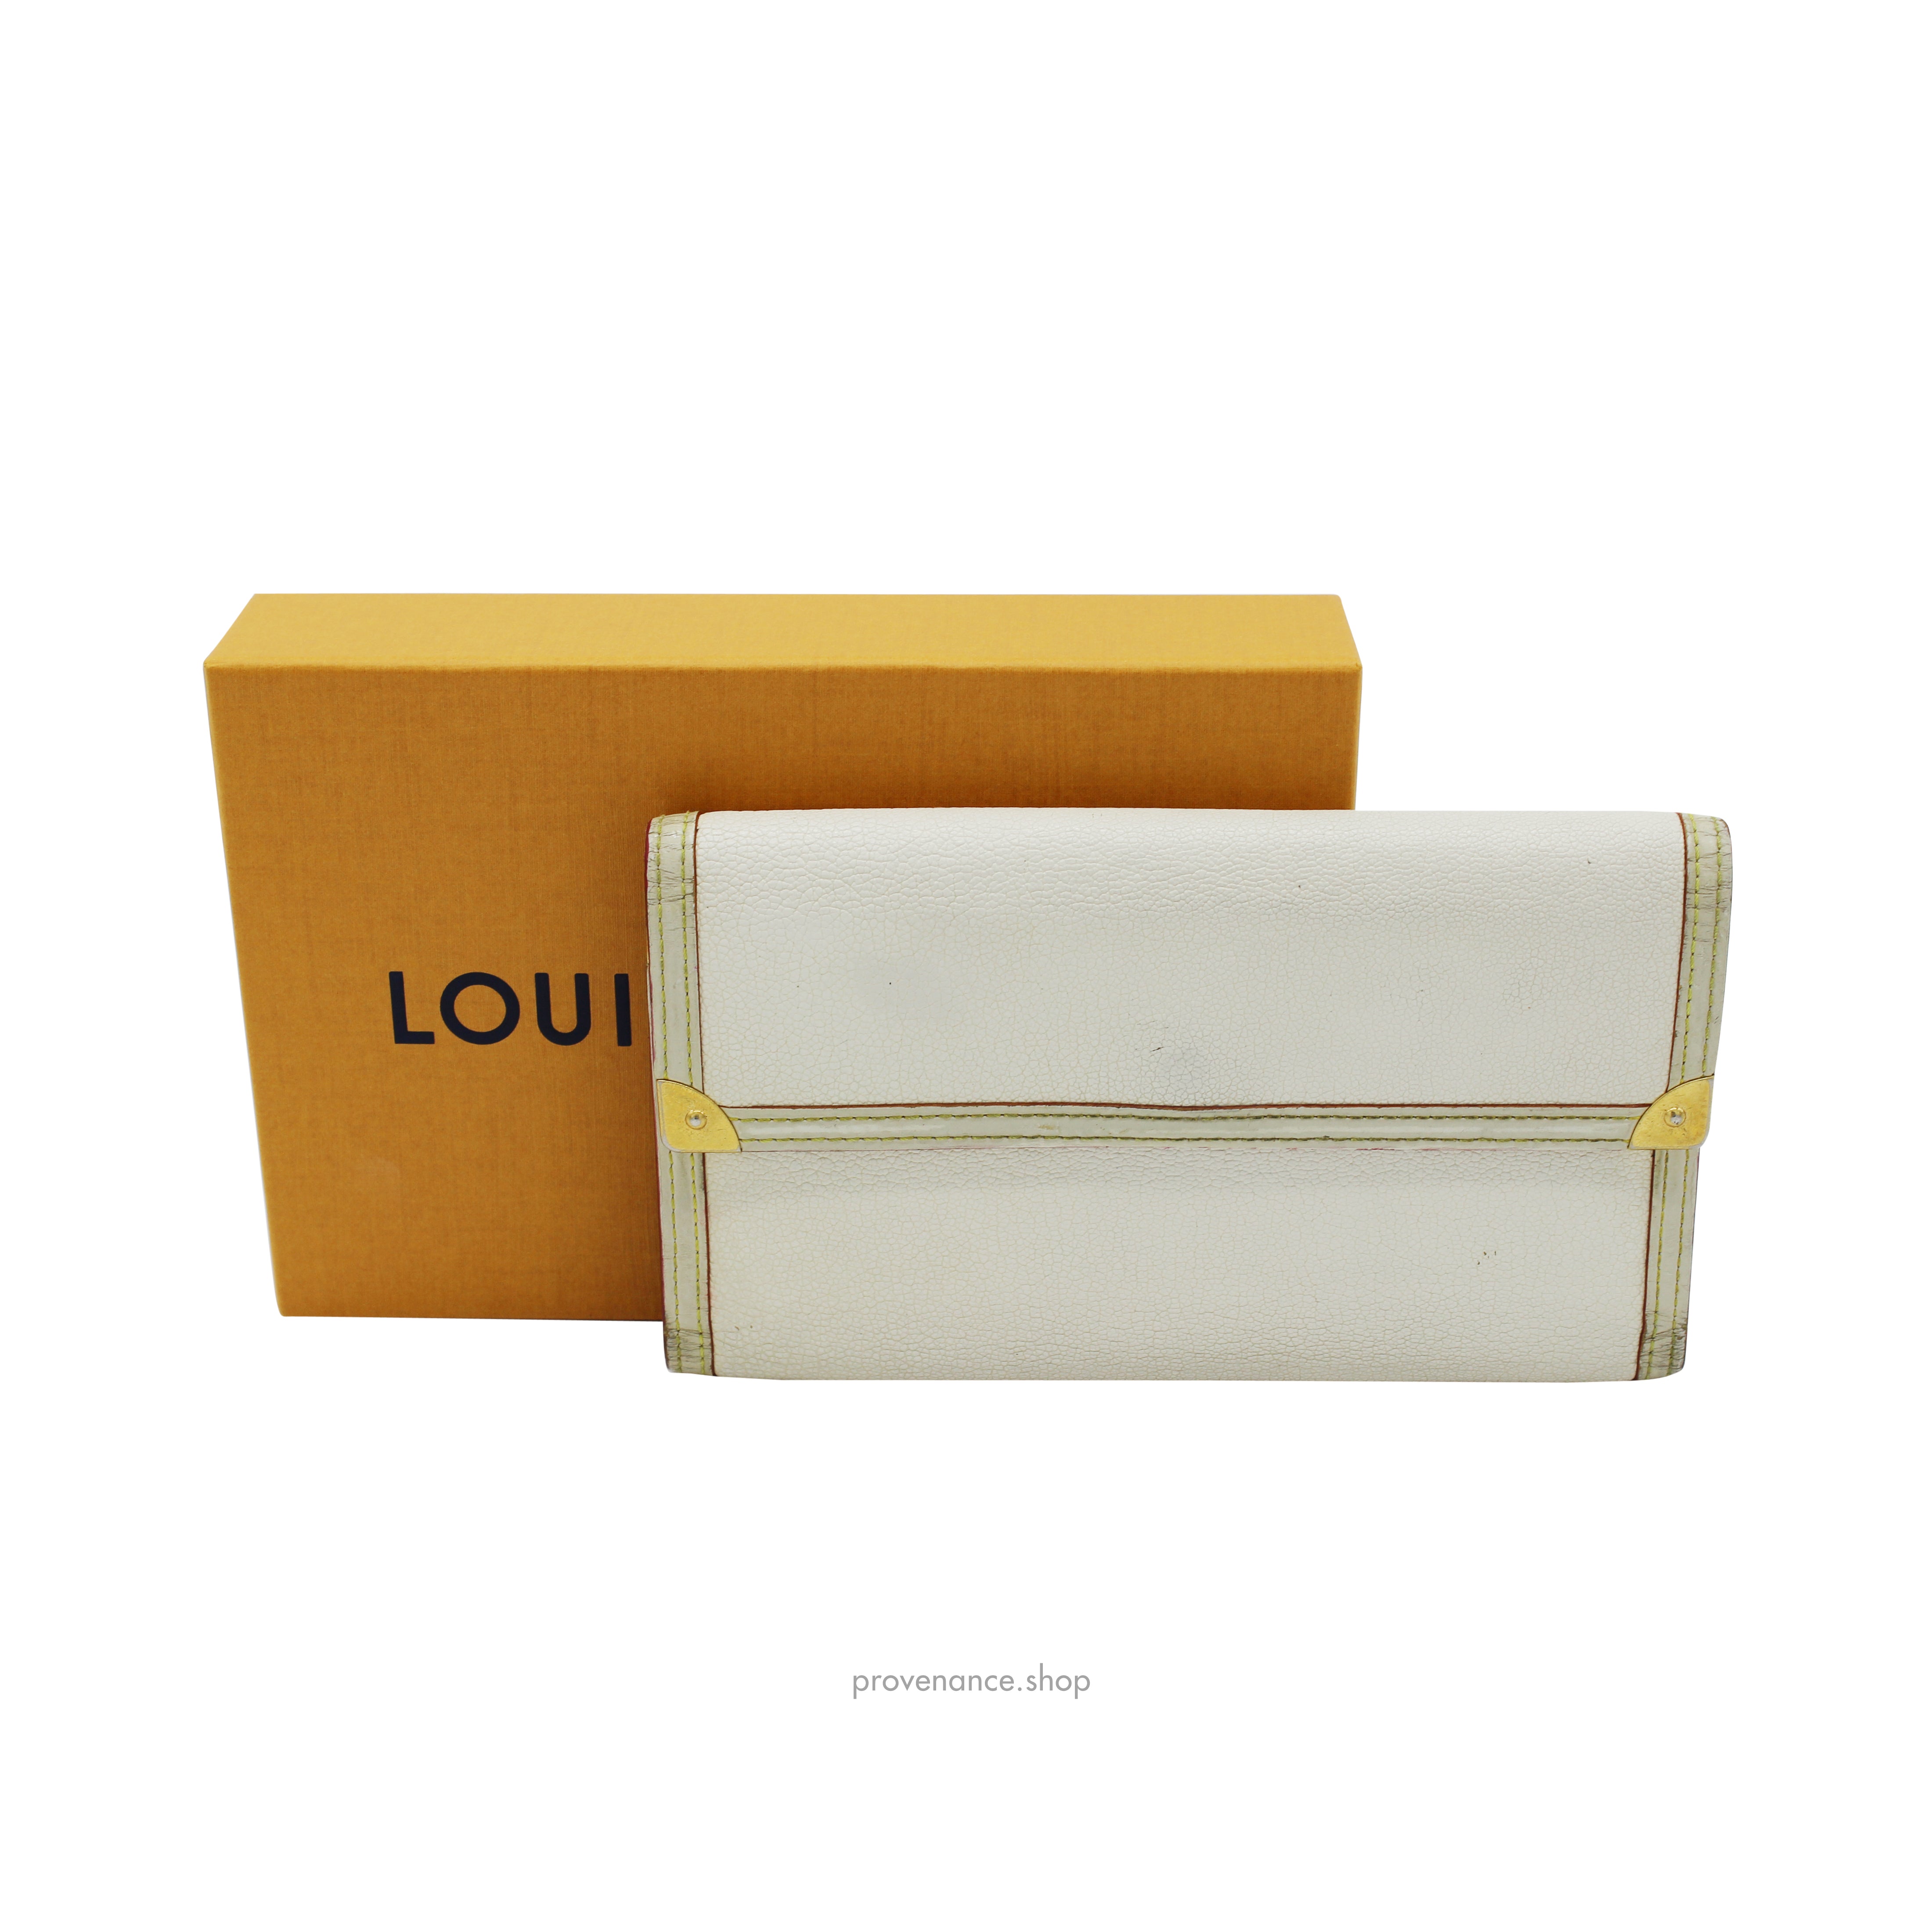 Vuitton Marc Jacobs International Wallet - White Suhali Leathe PROVENANCE